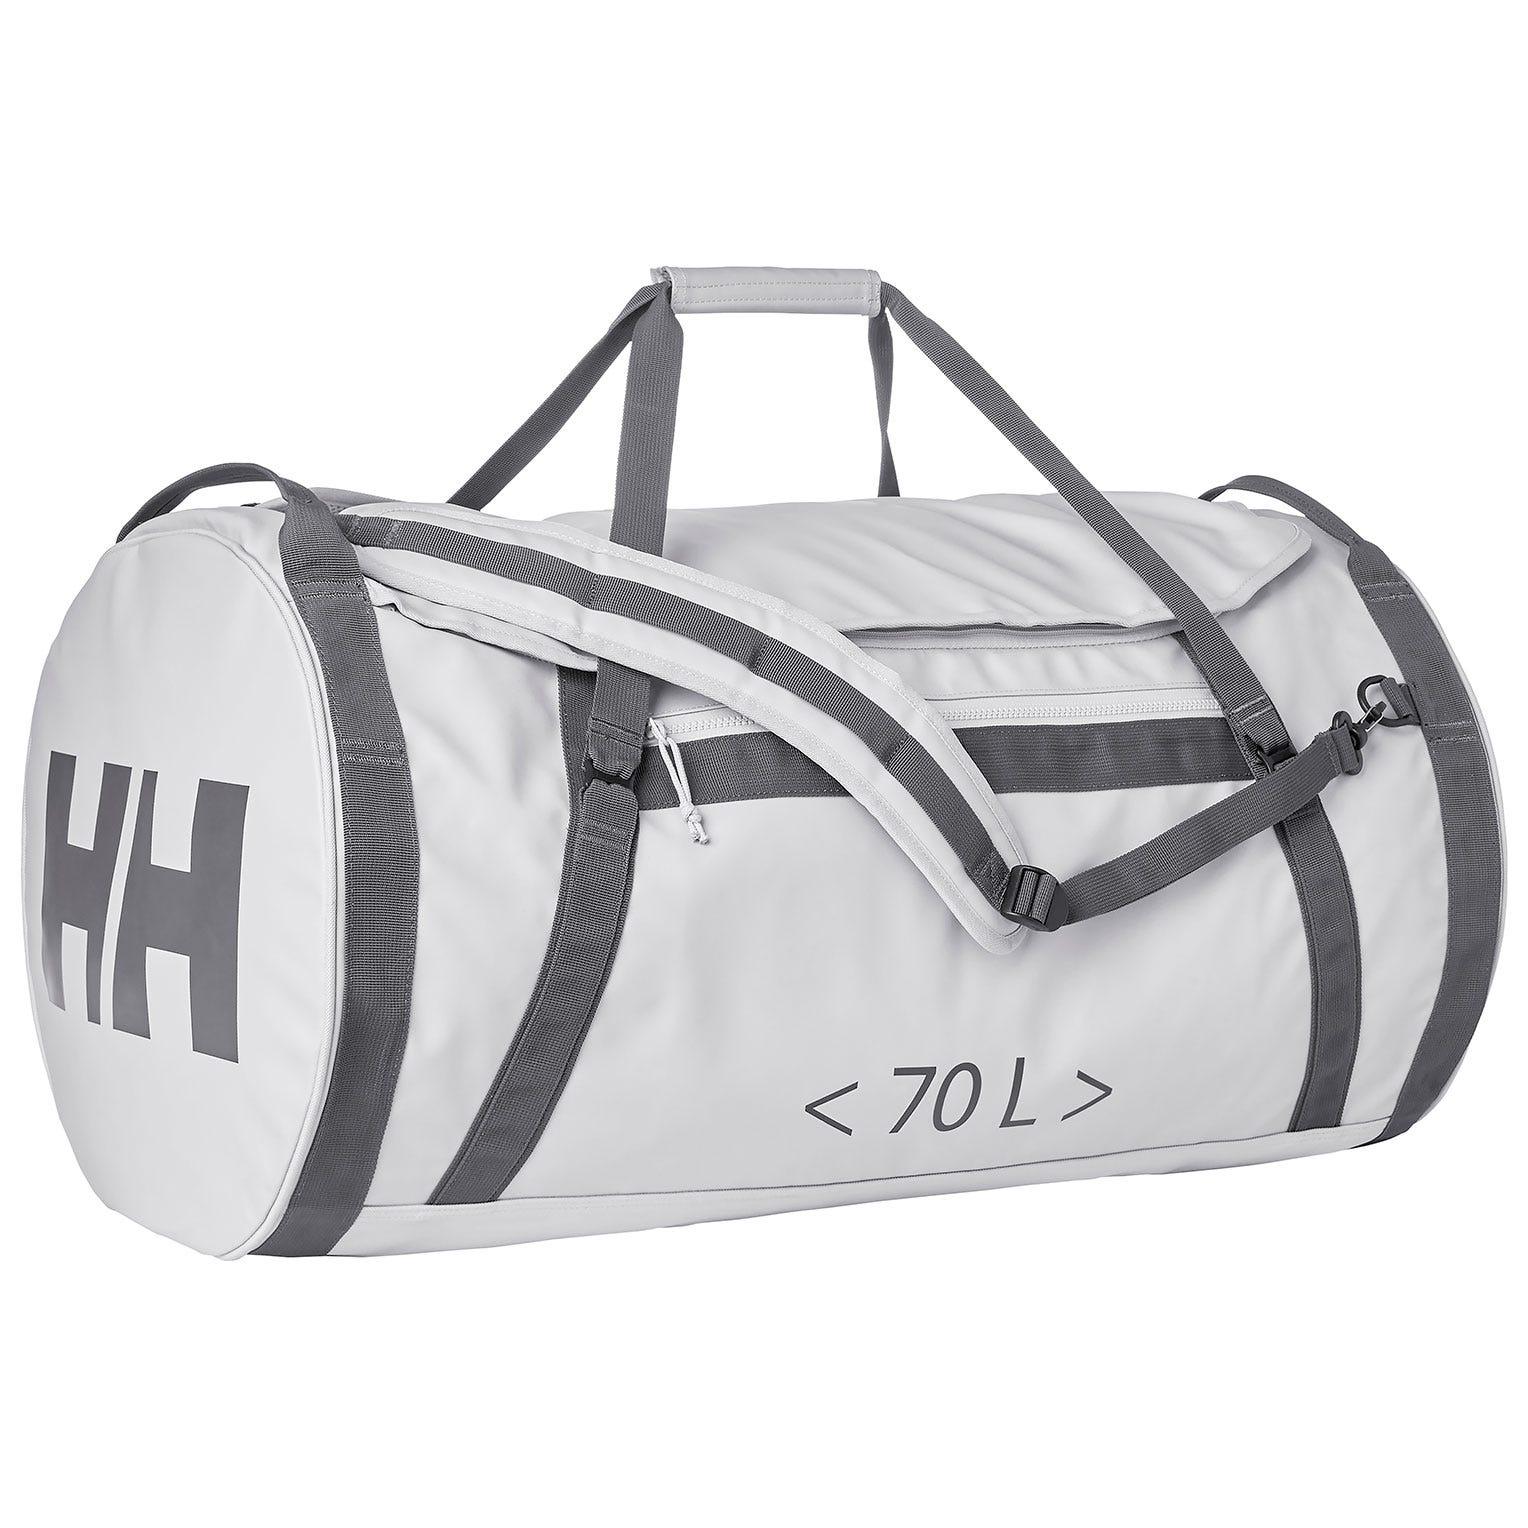 Helly Hansen Hh Sporty Duffel Bag 2 70l Std in Metallic | Lyst